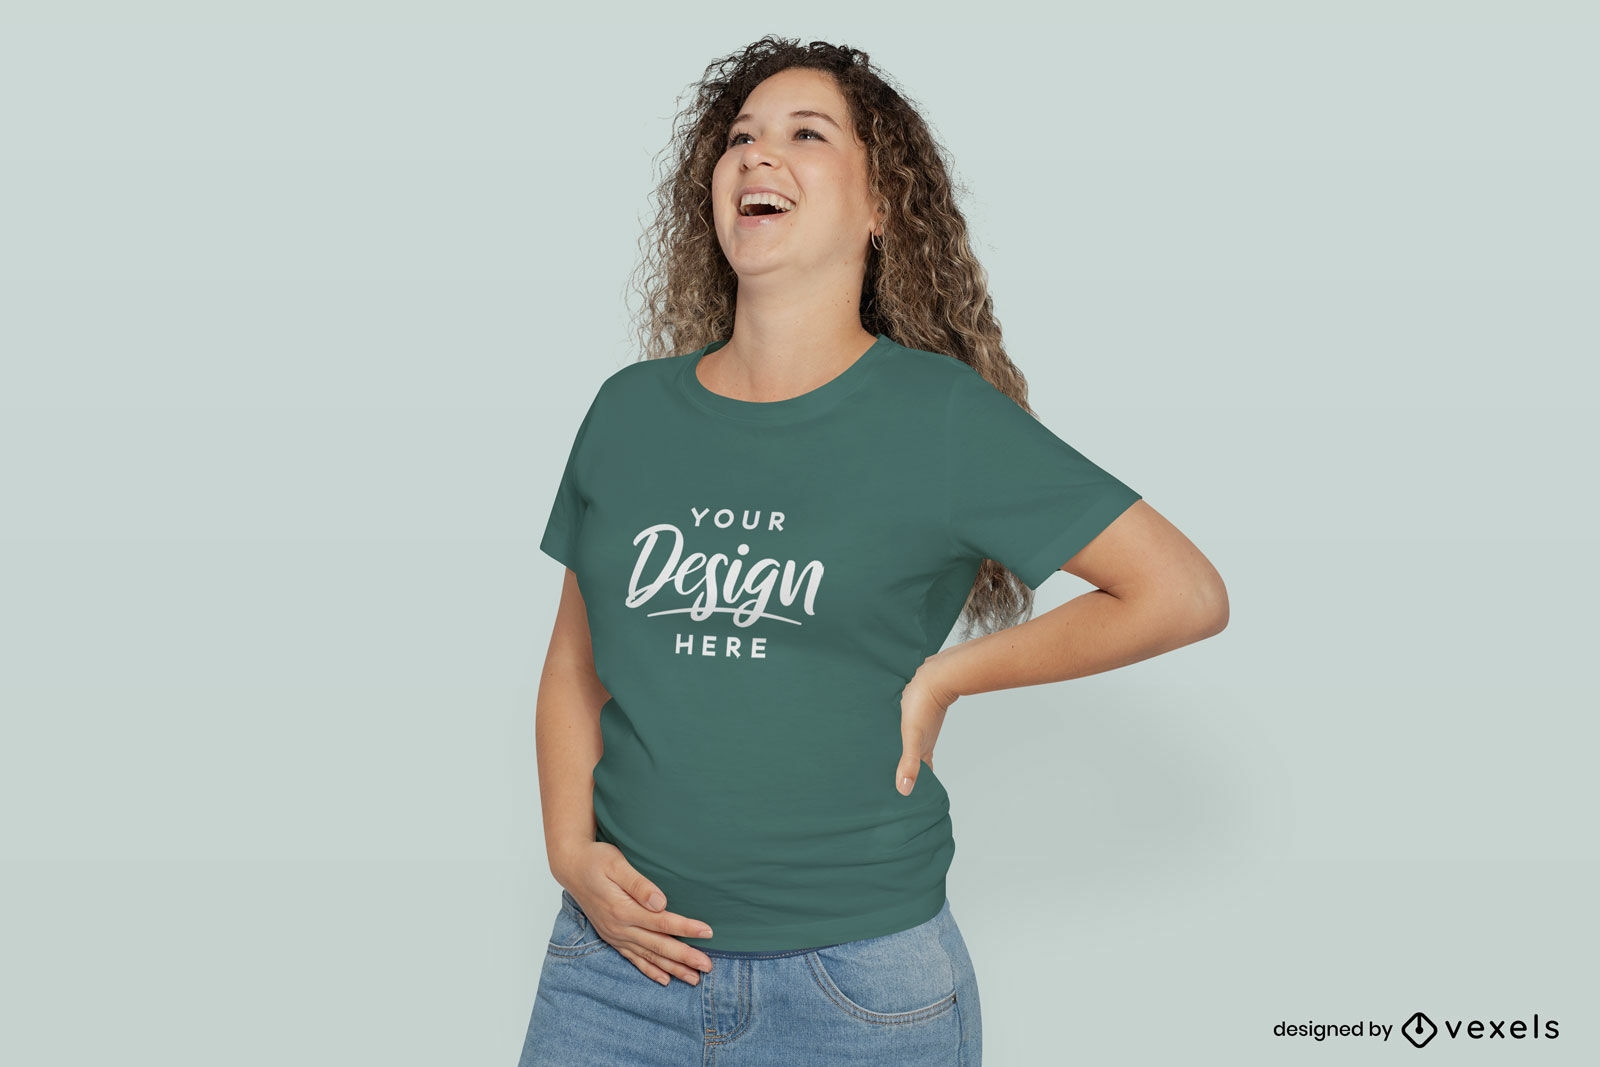 Pregnant woman laughing t-shirt mockup